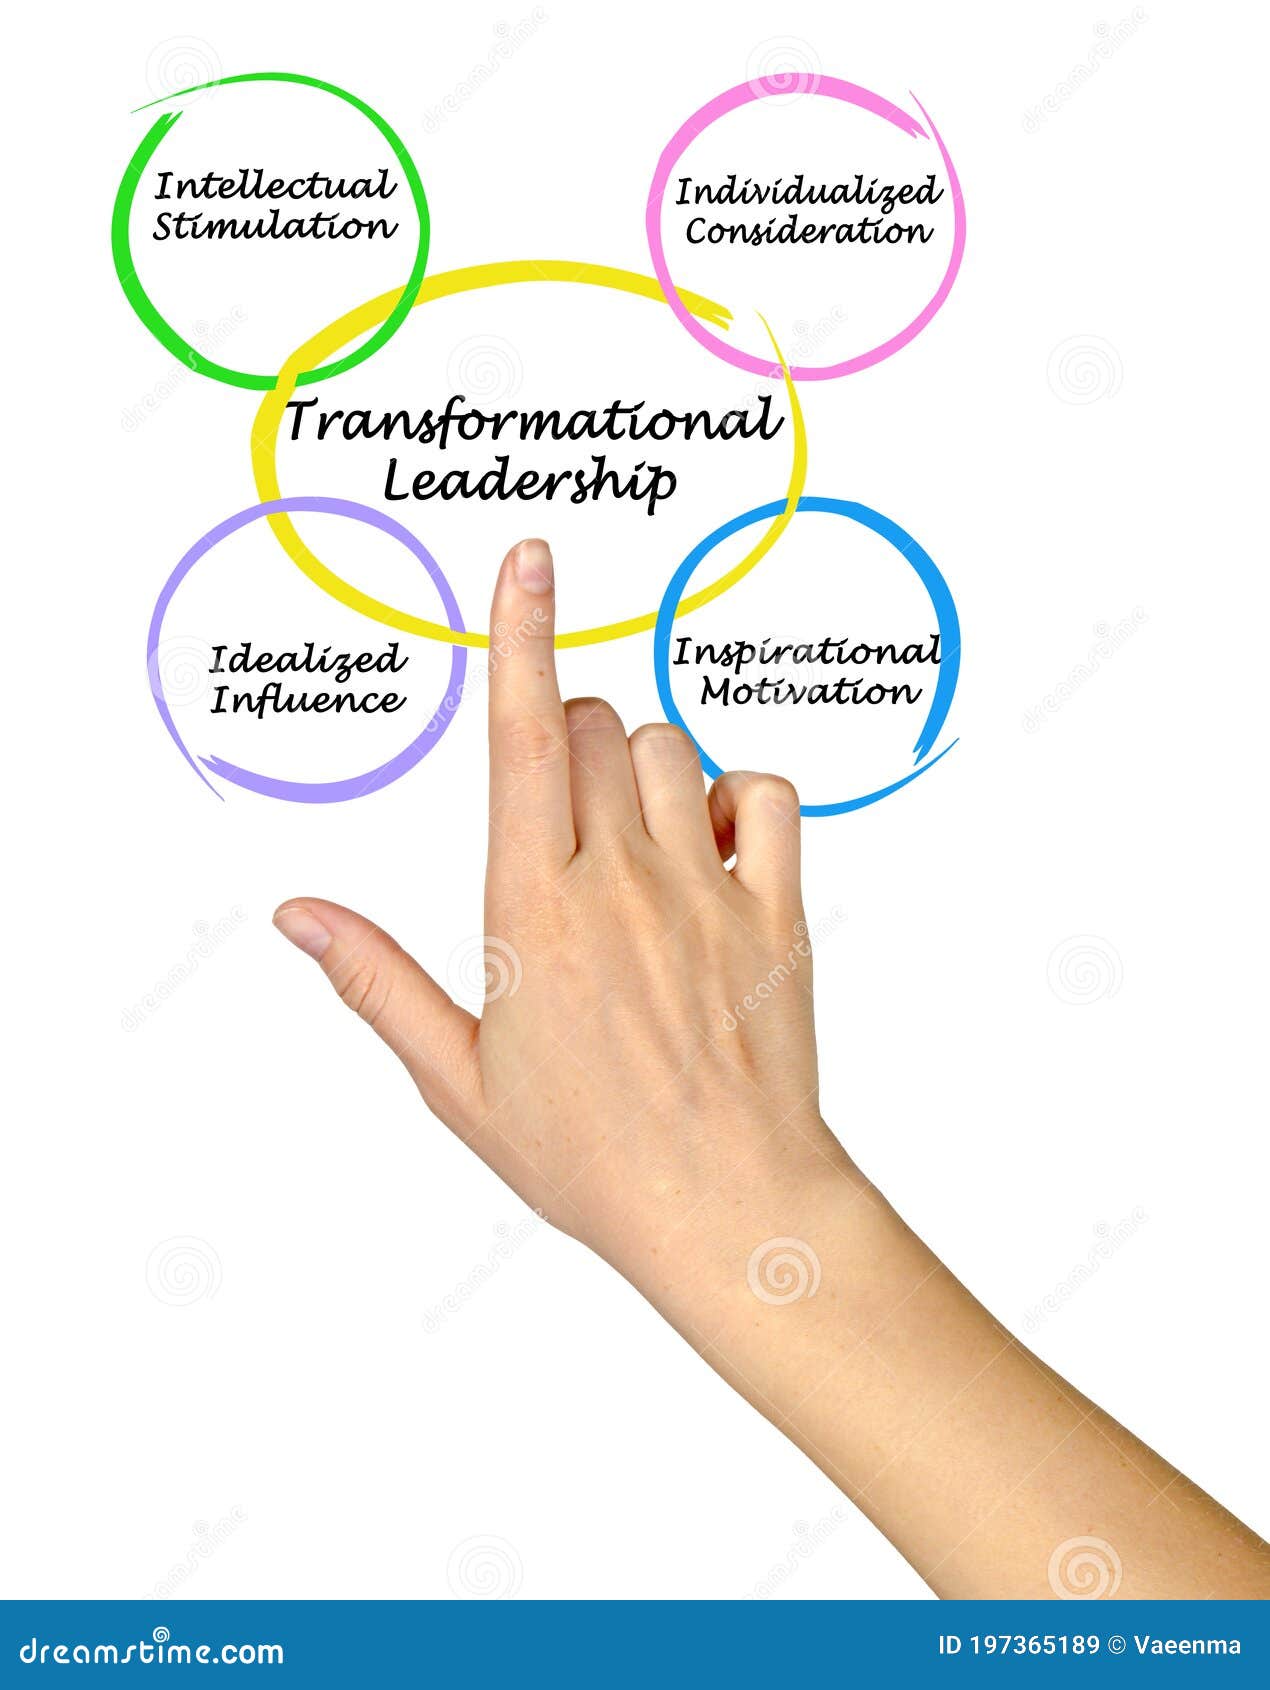 characteristics of transformational leadership